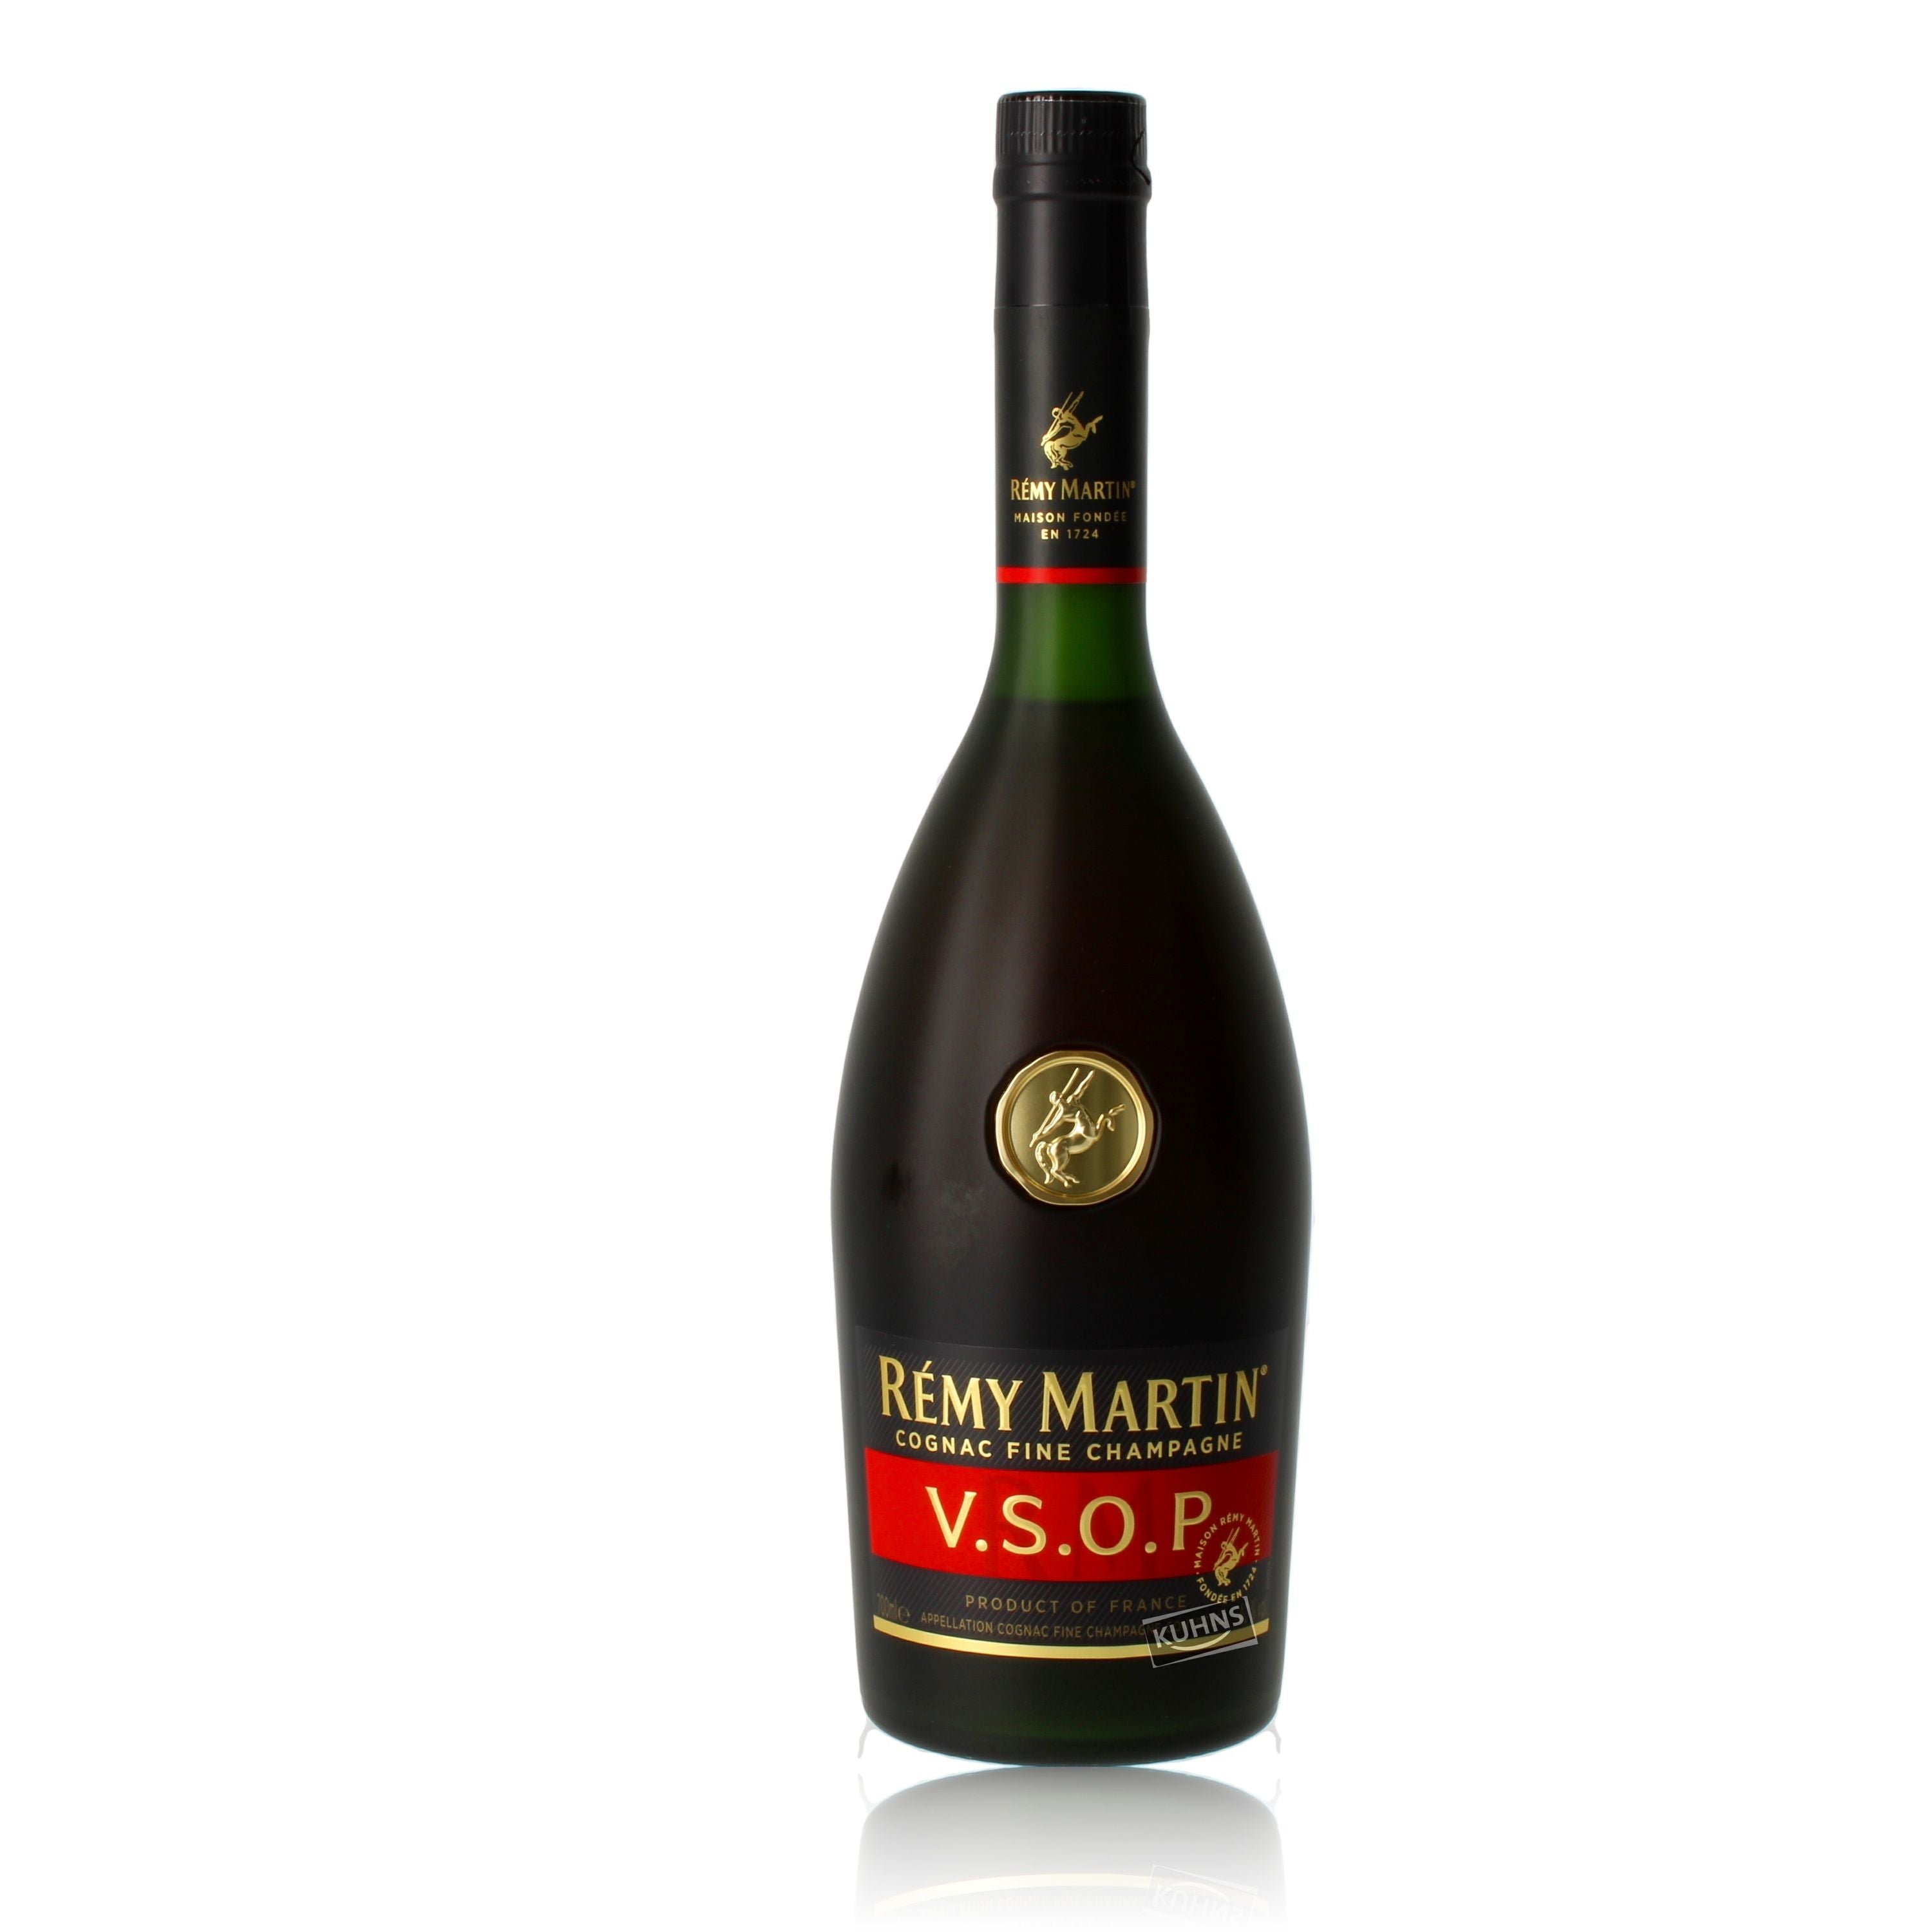 Remy Martin Cognac VSOP 0,7l, alc. 40 Vol.-%, Cognac  Frankreich